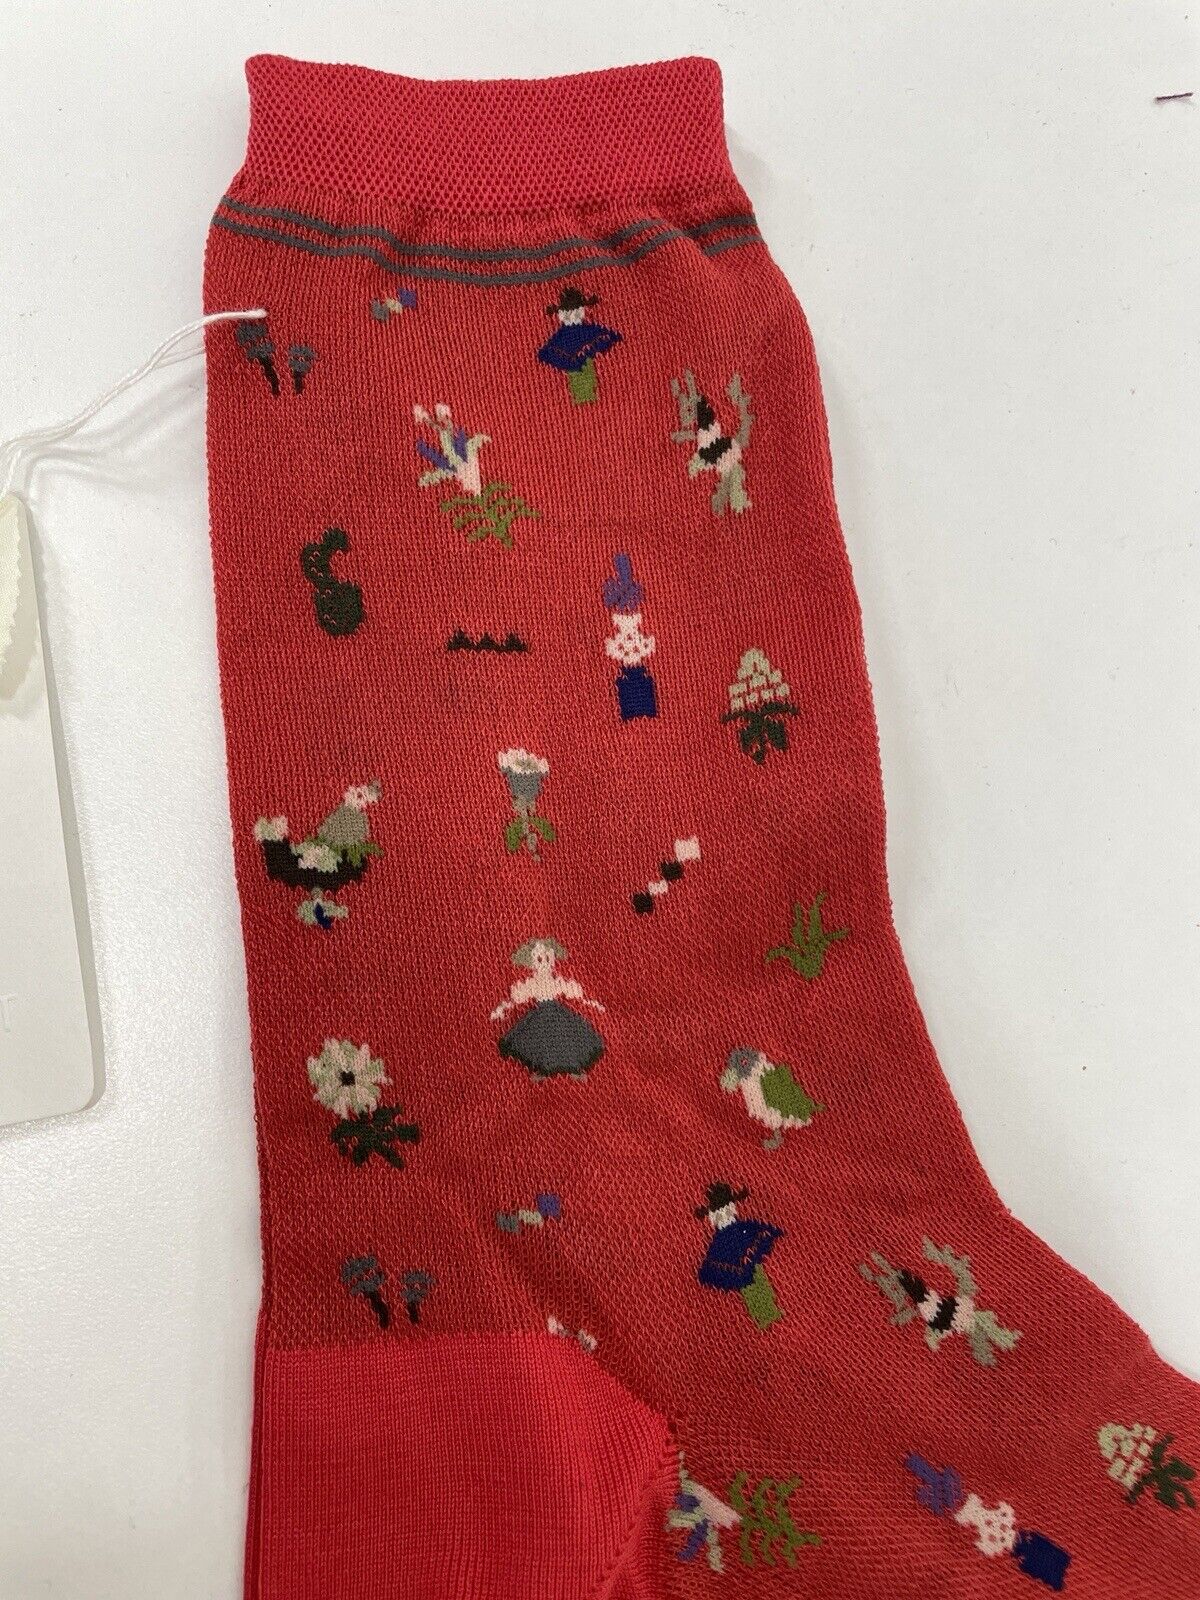 Antipast Women’s Adult AM-746 Printed Crew Socks Red Neat Tidy